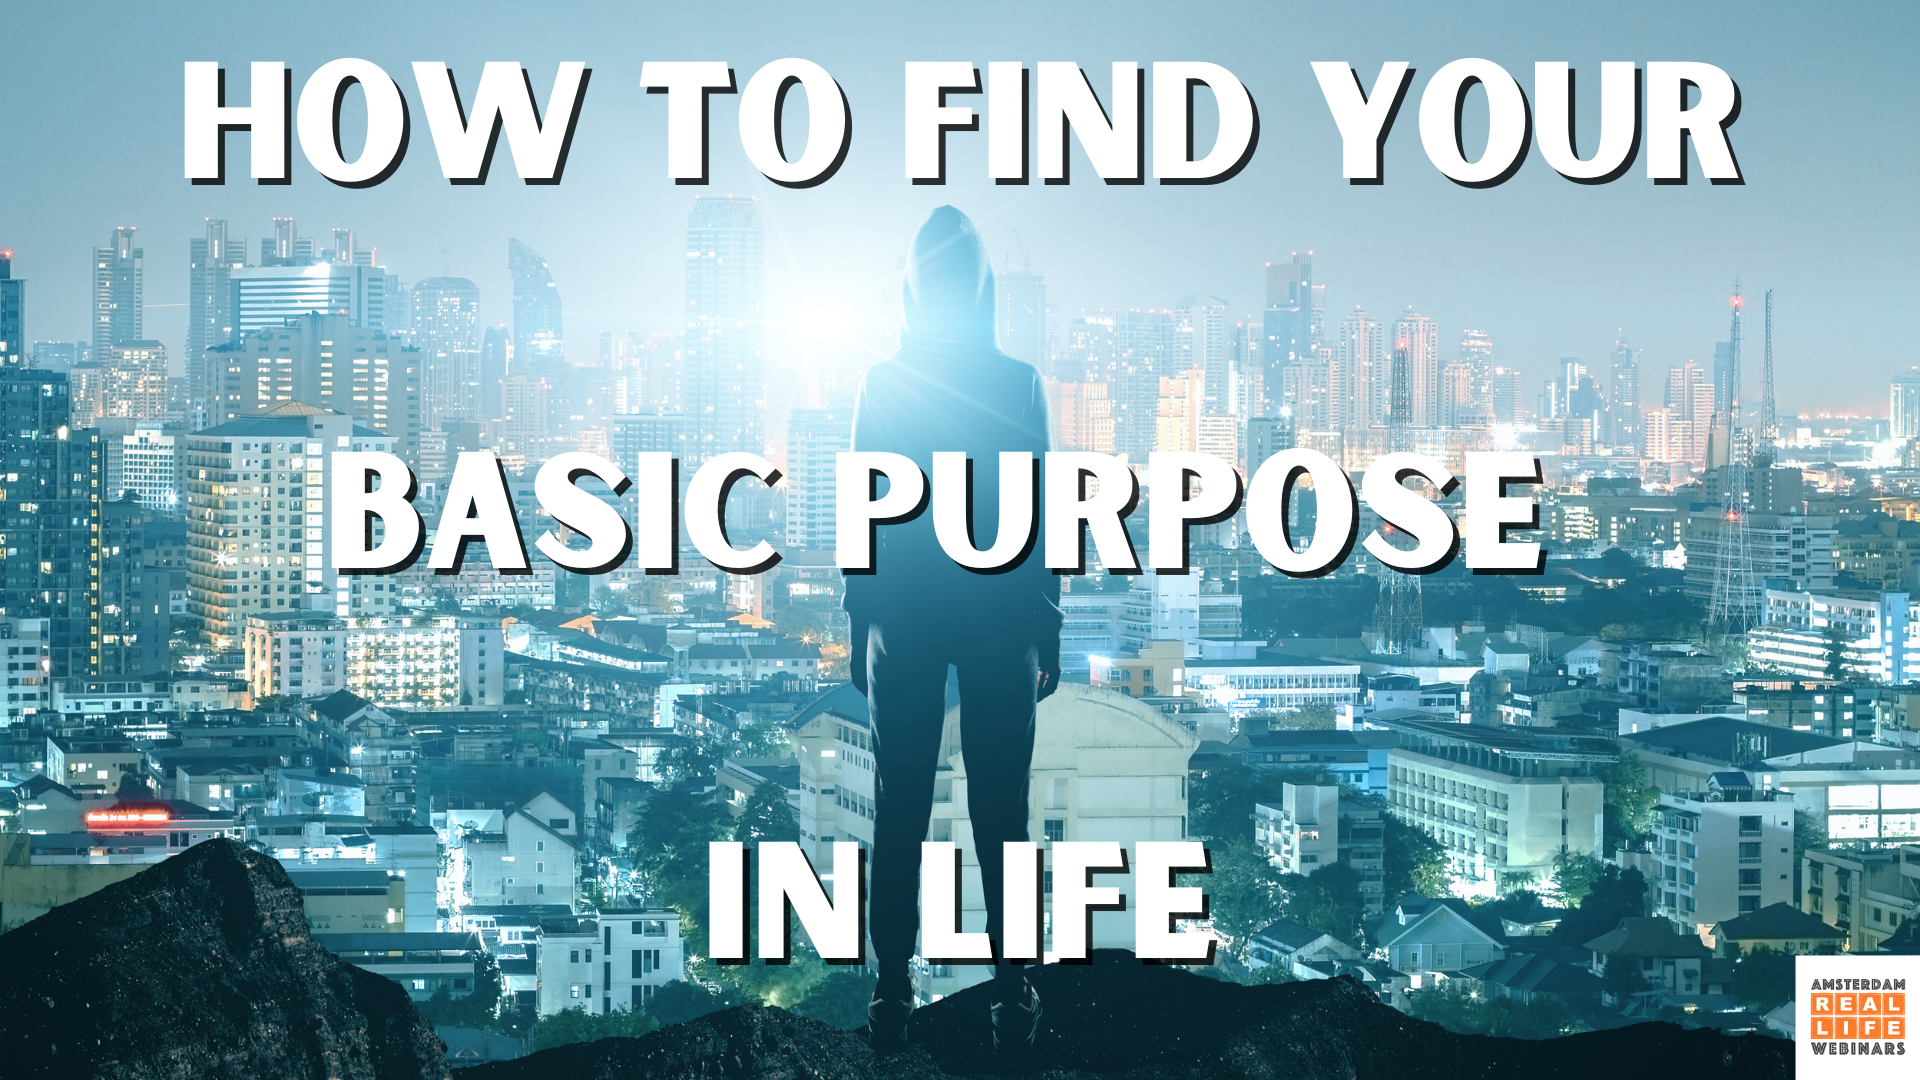 Basic Purpose